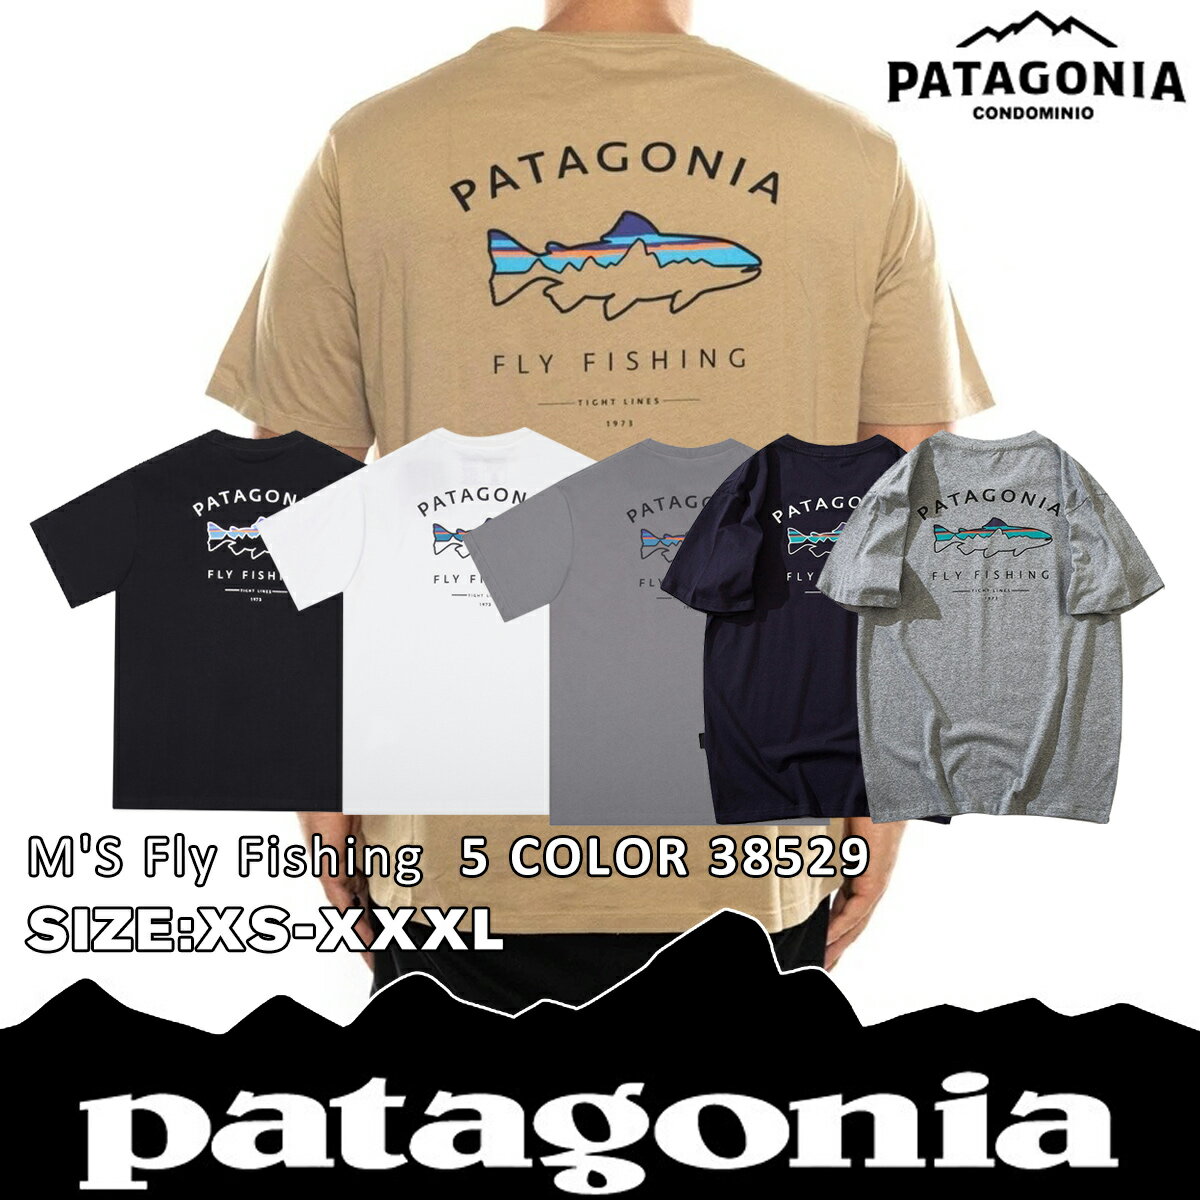 patagonia パタゴニア Tシャツ M 039 s Flying Fish Responsibili Tee XS S M L XL XXL XXXL プリントTシャツ P6ロゴ シール 魚 フライ フィッシング FLY FISHING 38529『並行輸入品』